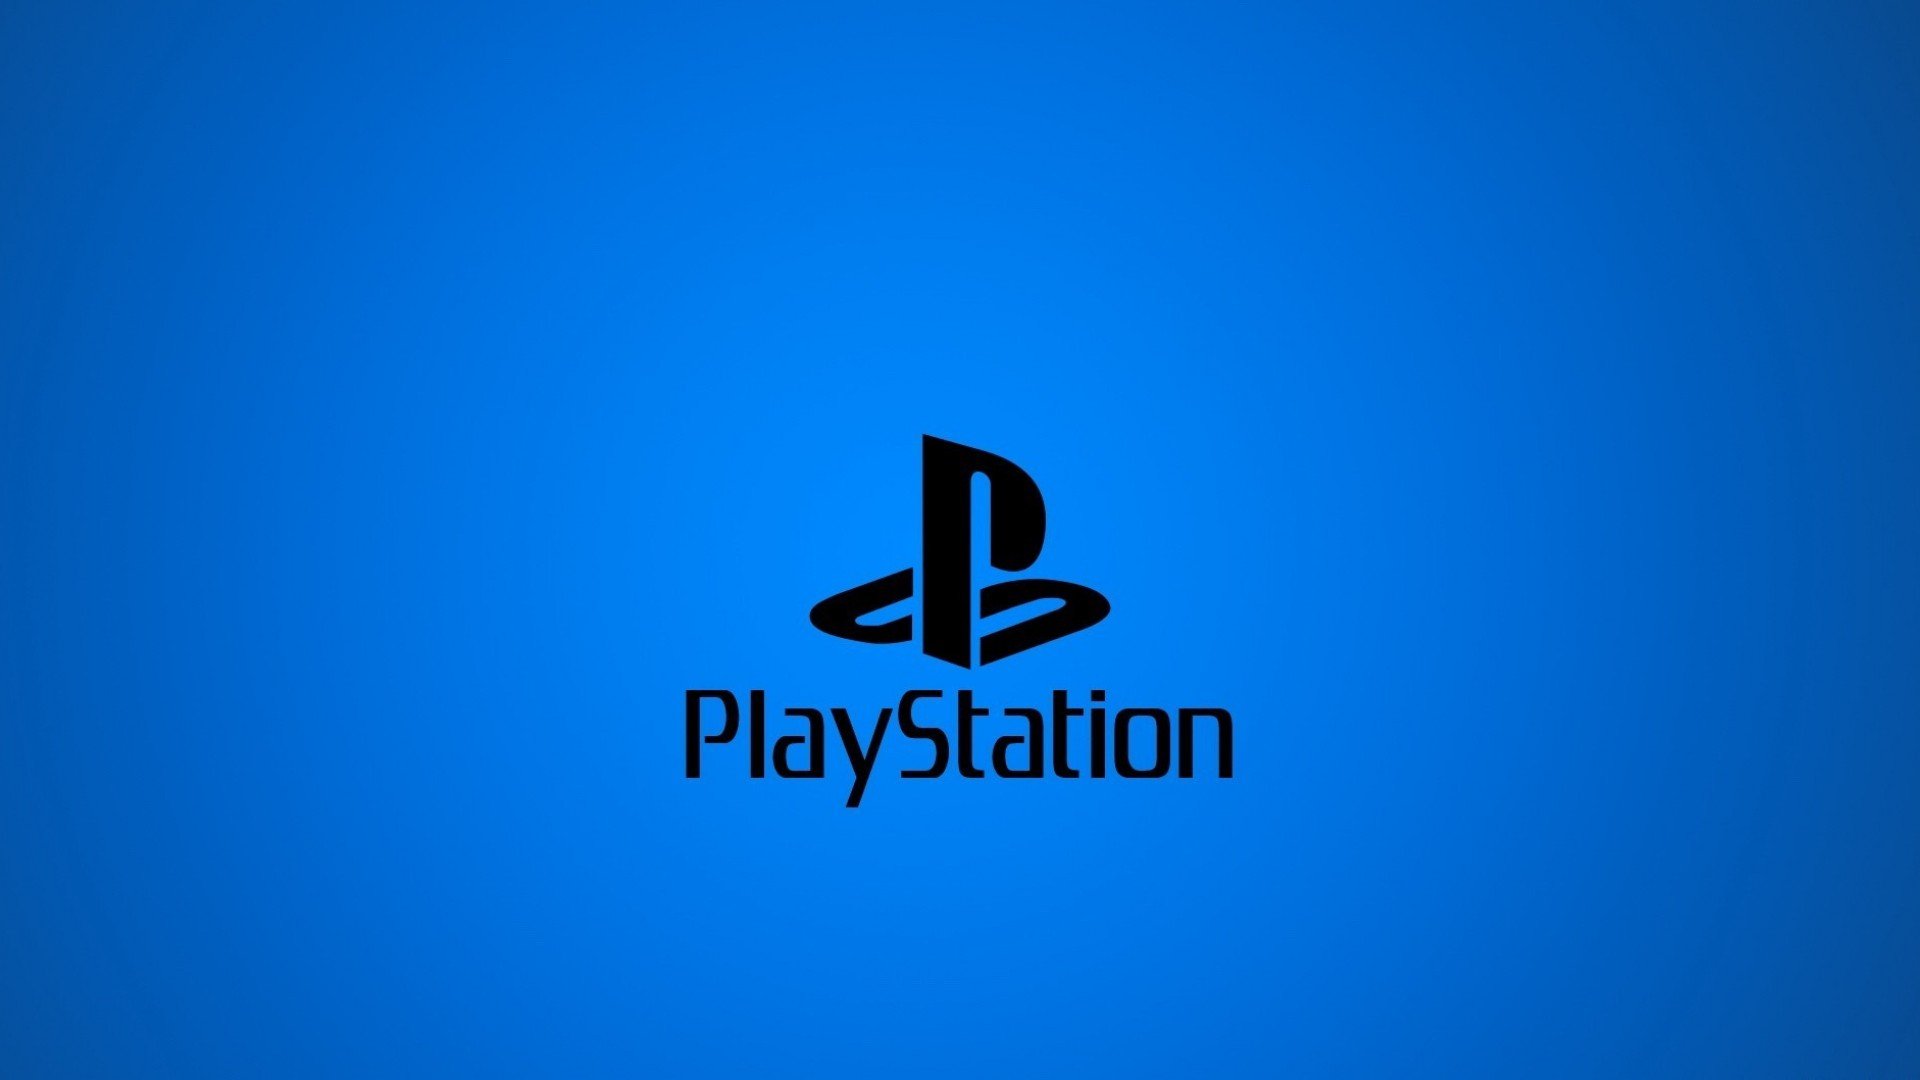 مواصفات PlayStation 5